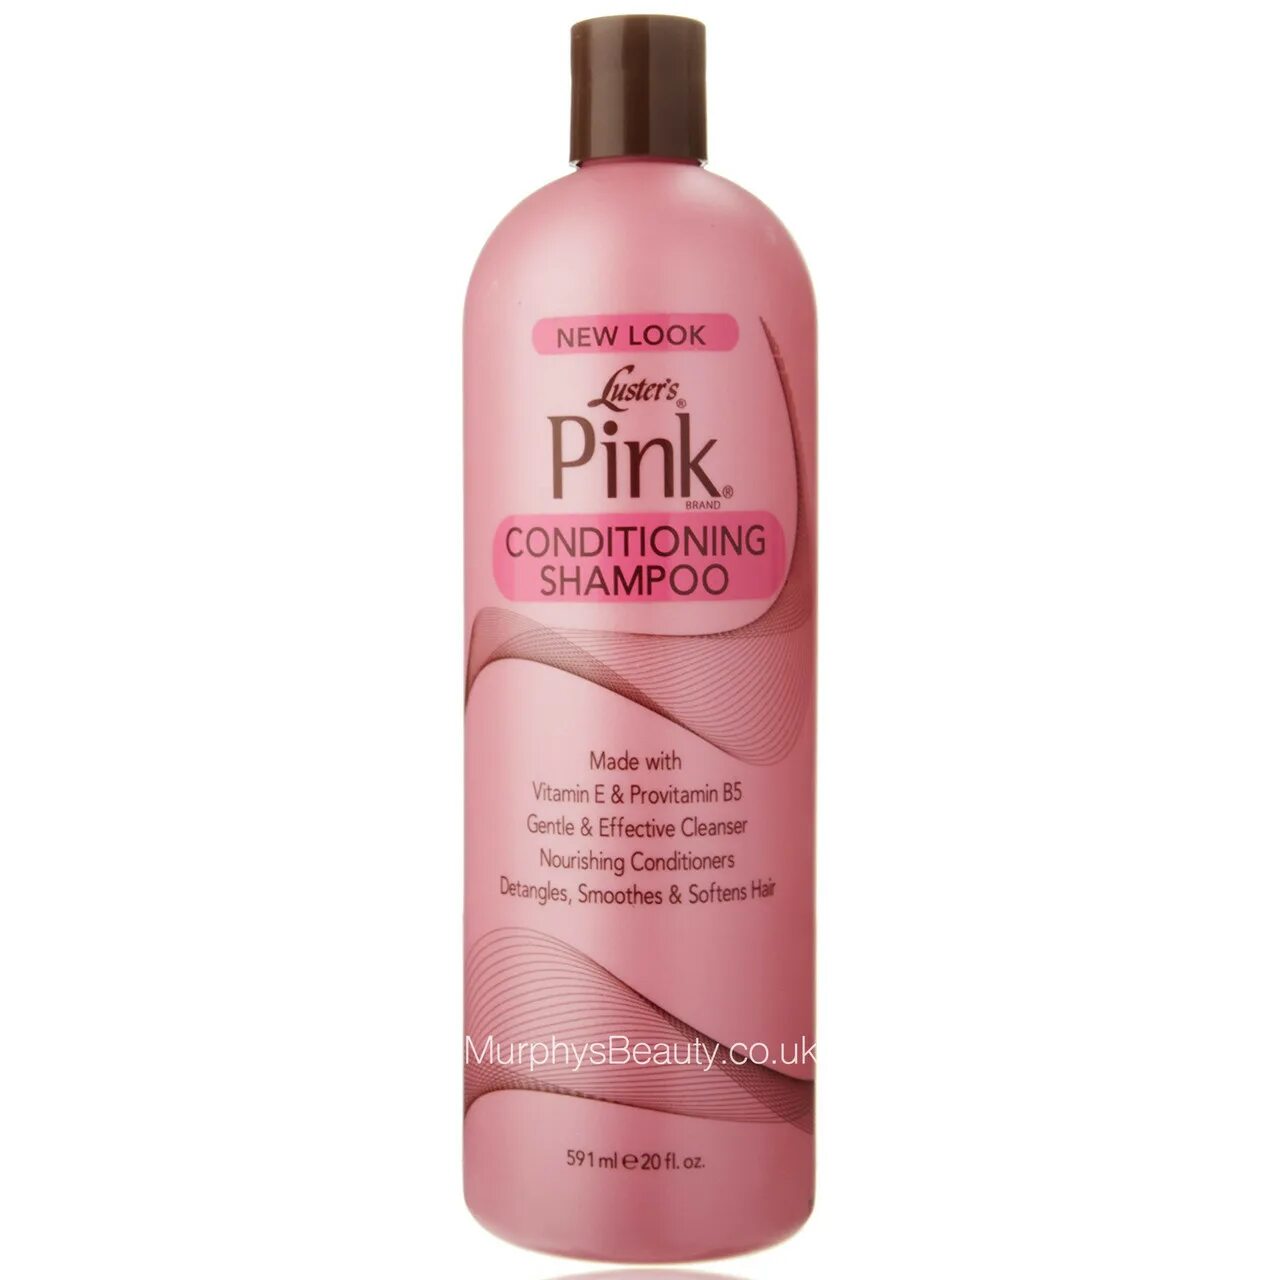 Schwarzkopf шампунь Pink Wash. Шварцкопп God to be розовый шампунь. Шампунь шварцкопф розовый. Шампунь и бальзам розовый.